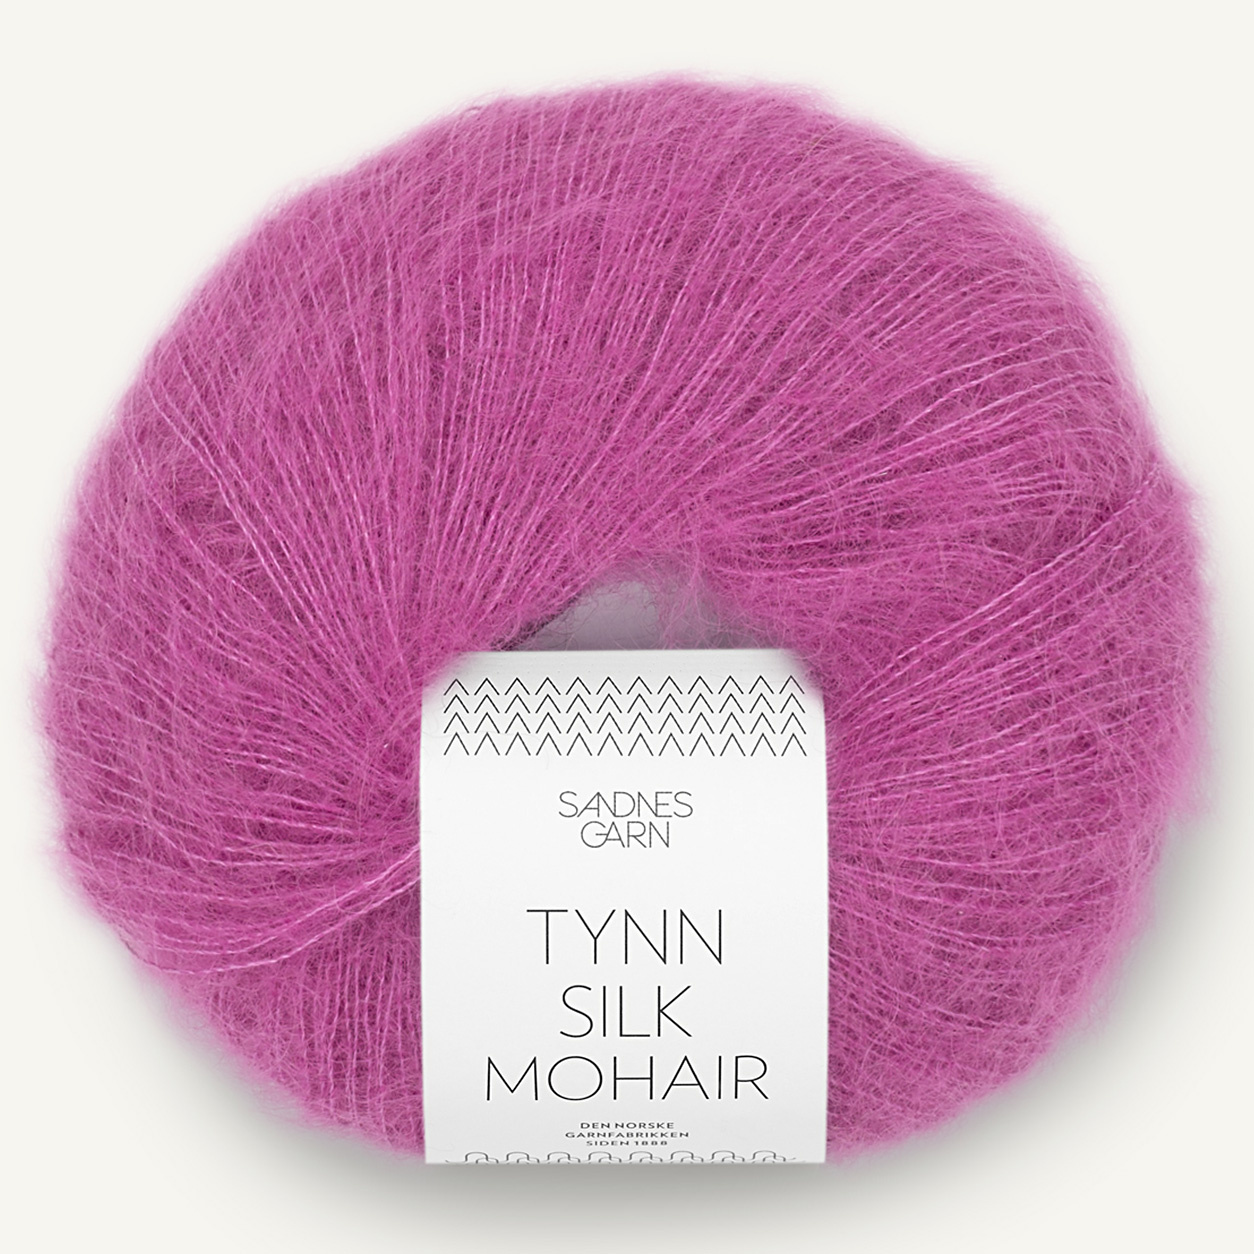 Sandnes Tynn Silk Mohair, 4628, Magenta